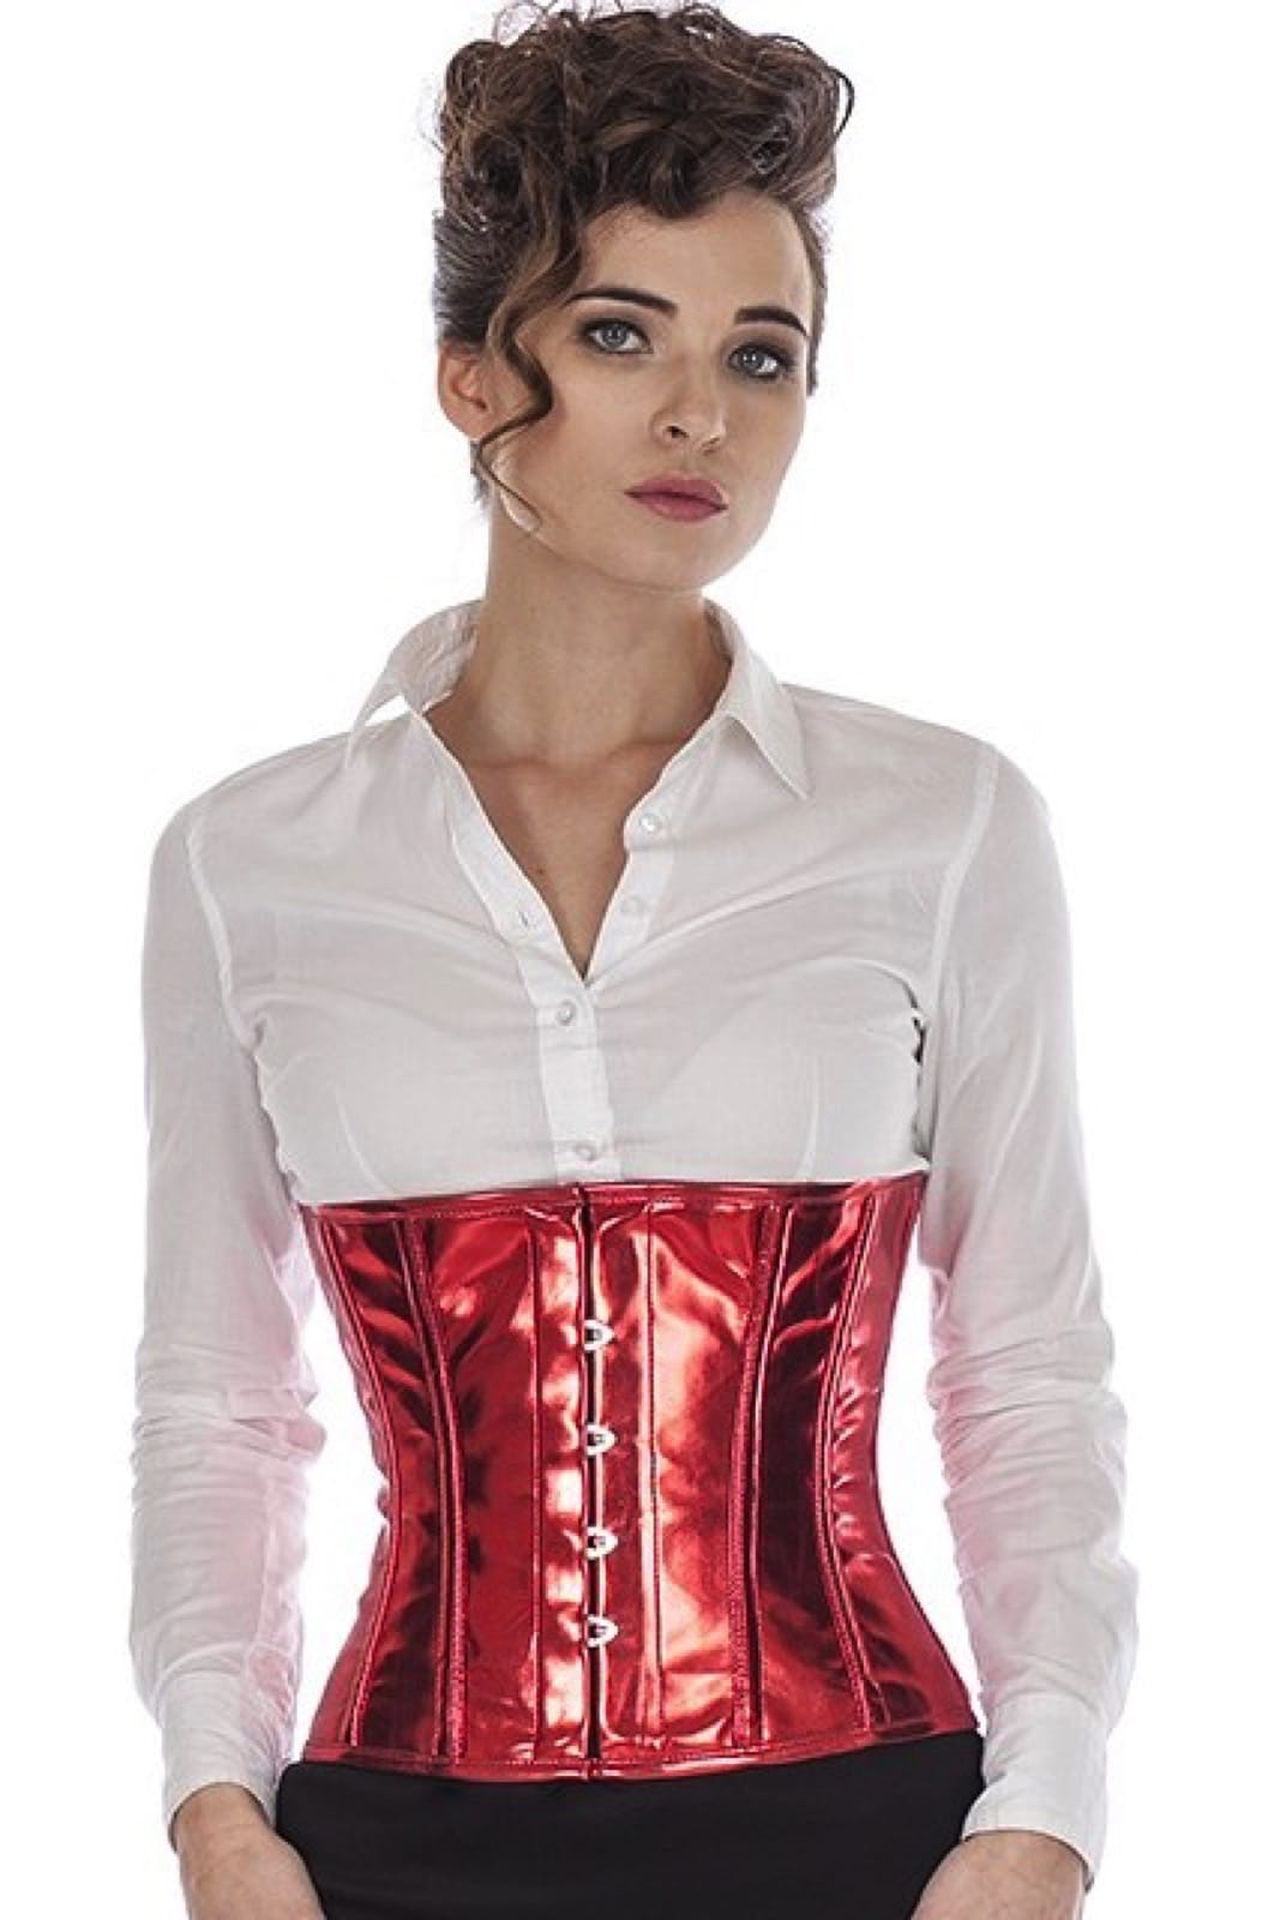 Lak corset rood glitter taille Korset pwG1